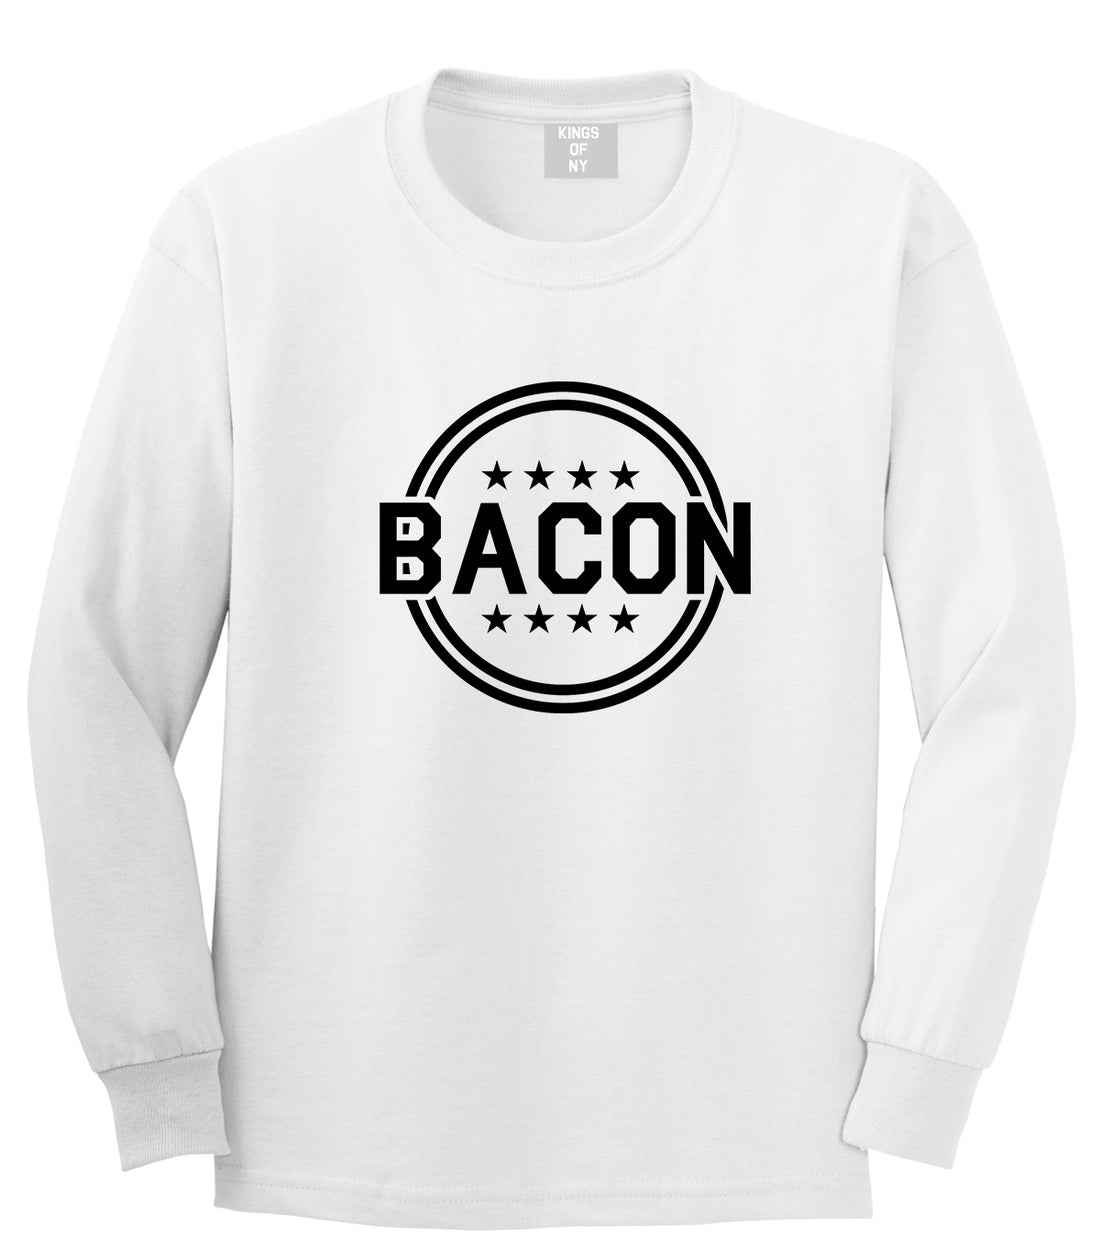 Bacon Stars White Long Sleeve T-Shirt by Kings Of NY